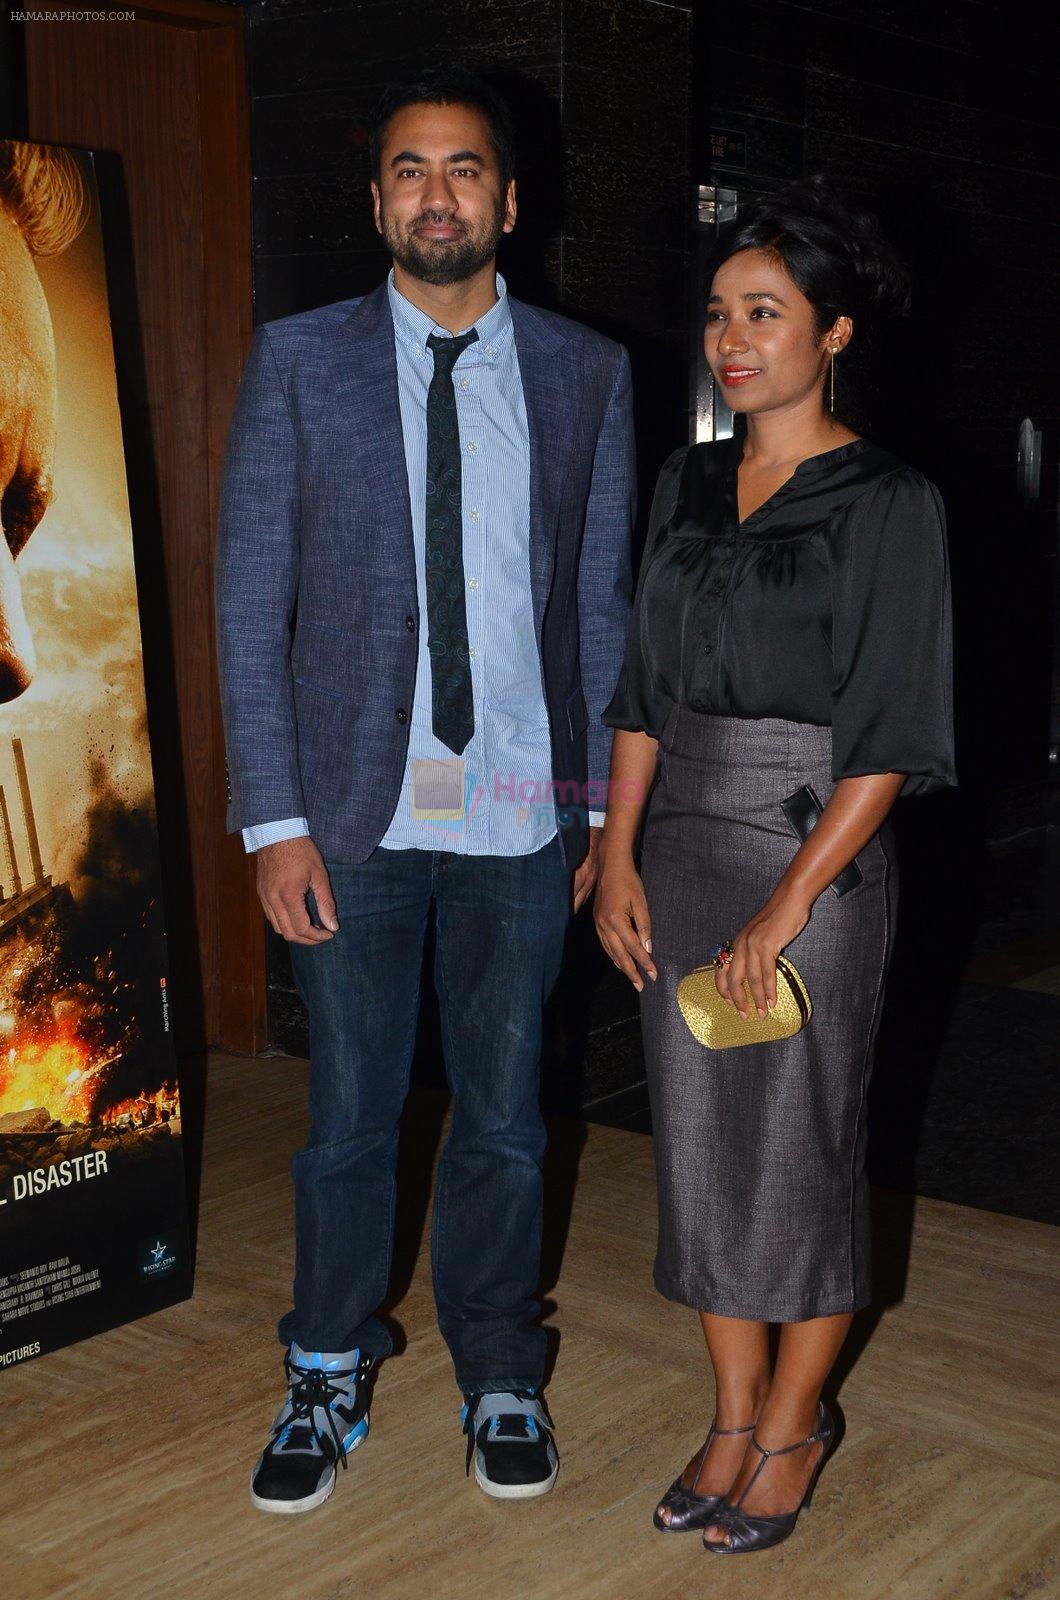 Tannishtha Chatterjee, Kal Penn at Bhopal film premiere in Mumbai on 4th Dec 2014